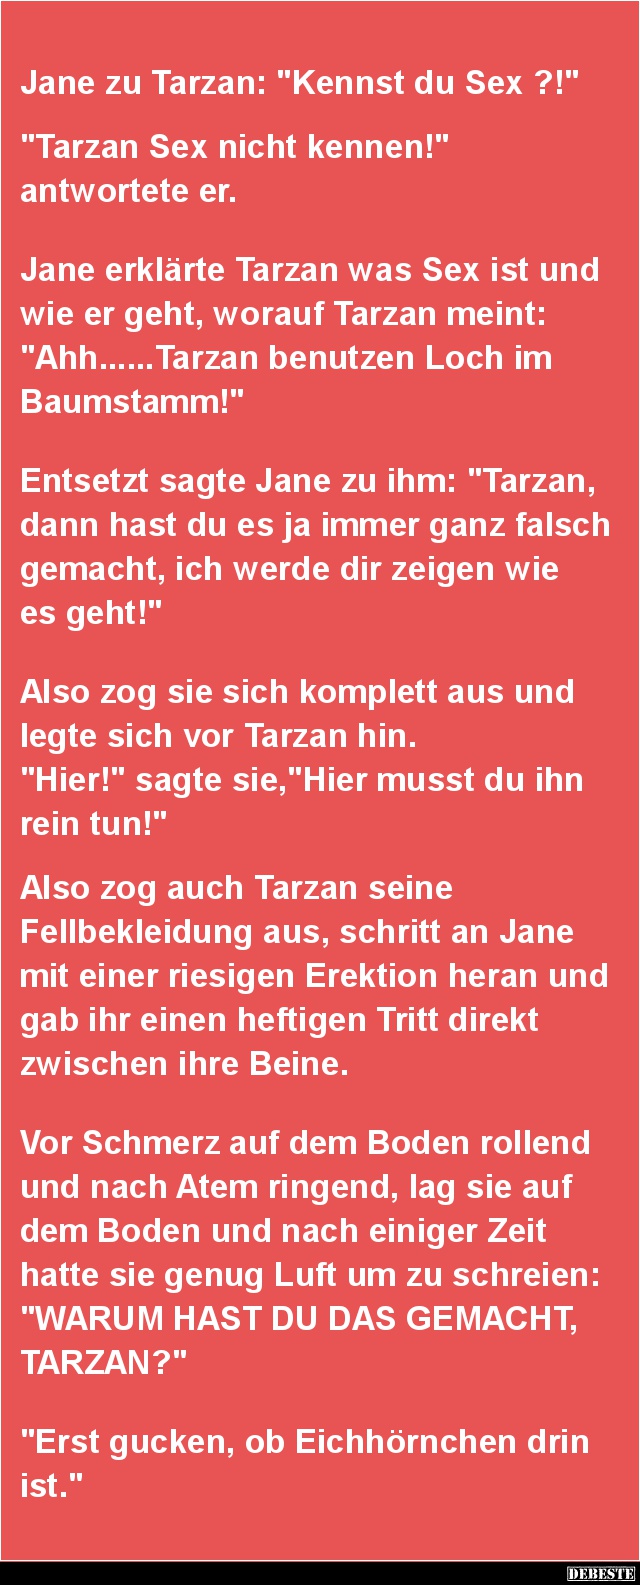 Jane zu Tarzan: 'Kennst du....'? - Lustige Bilder | DEBESTE.de